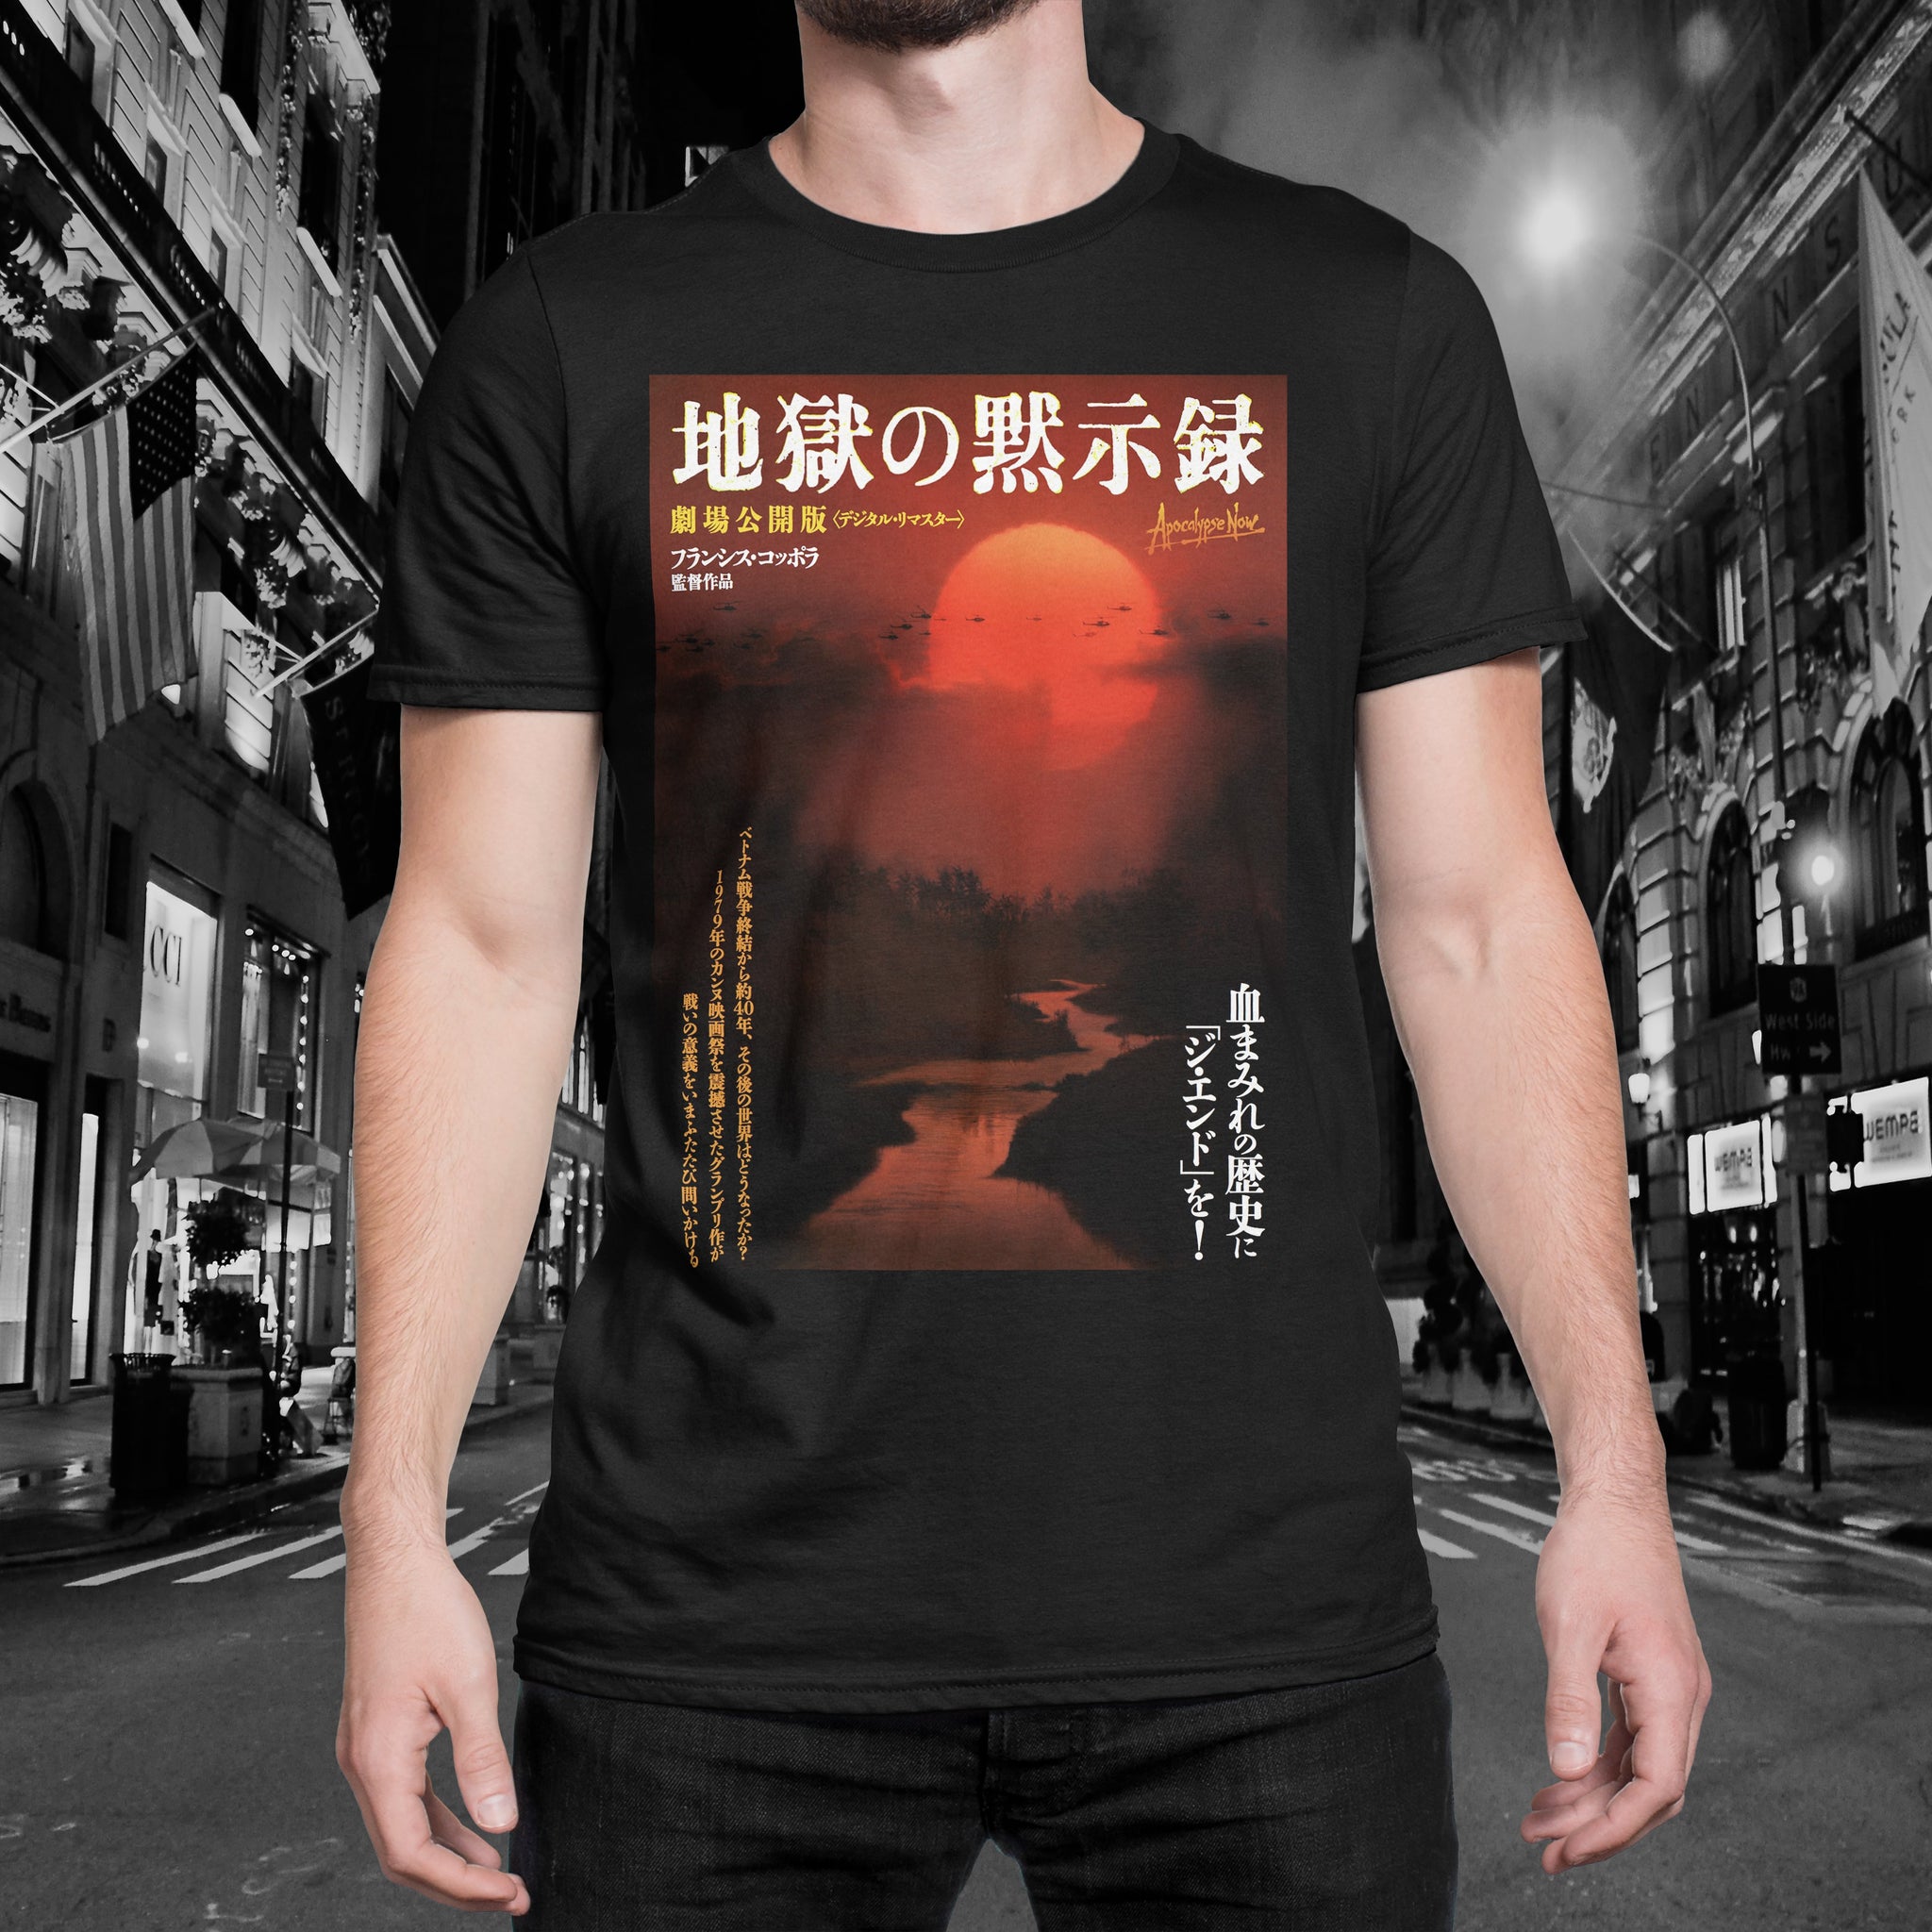 Apocalypse Now "Japan" Tee